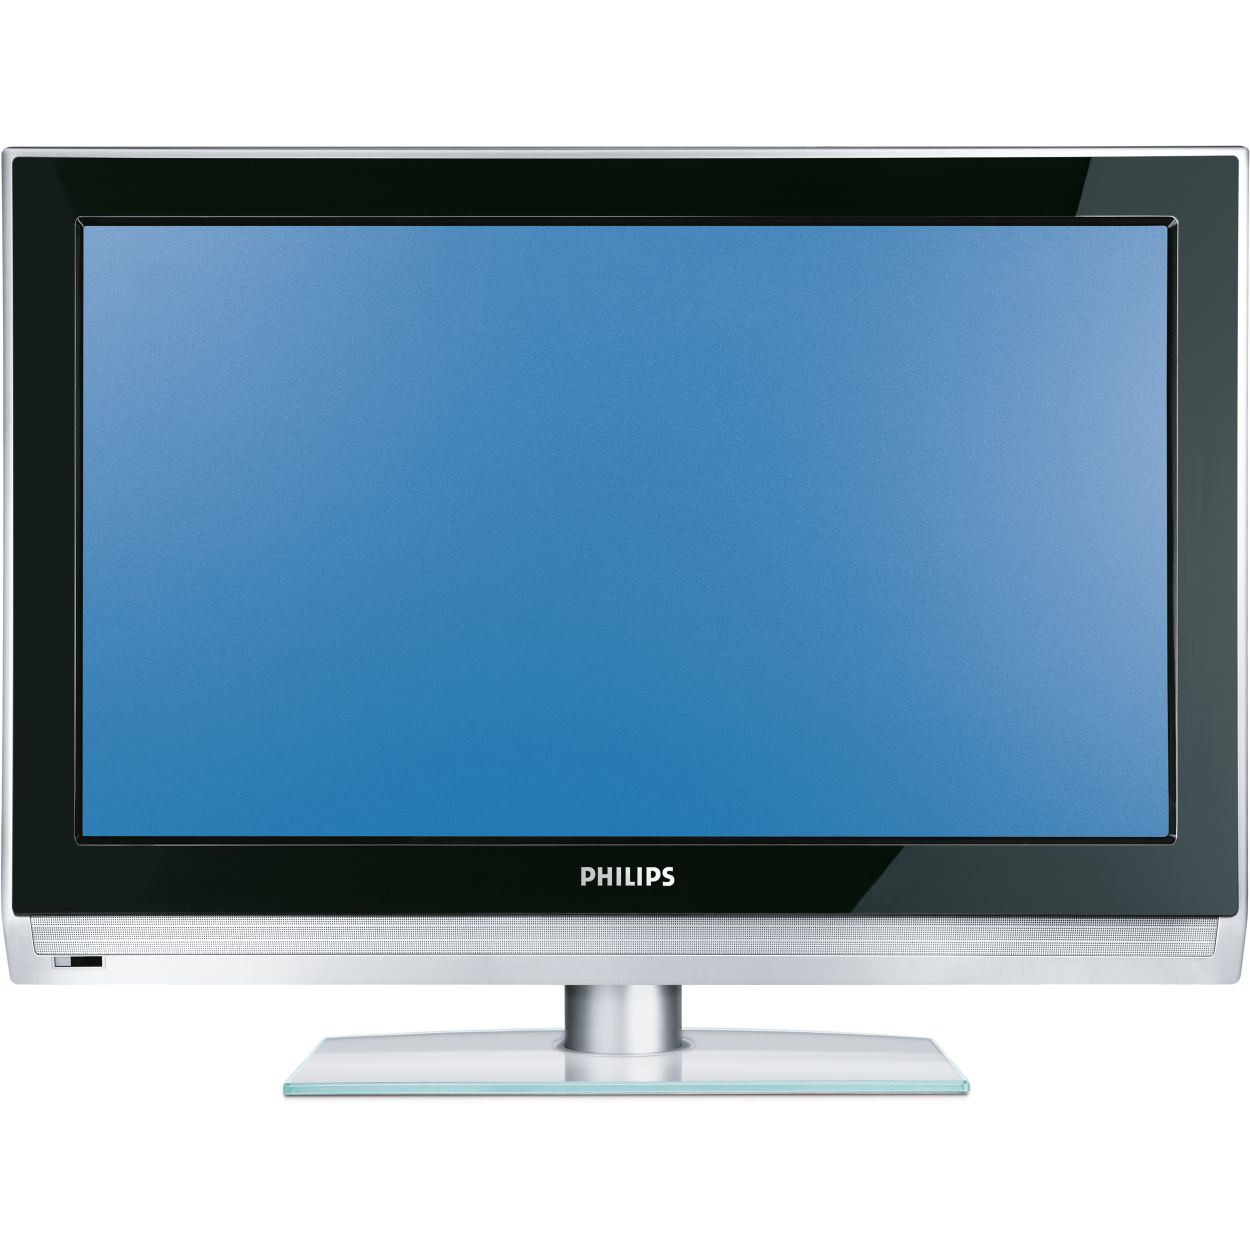 широкоэкранный плоский телевизор 32PFL5322S/60 | Philips